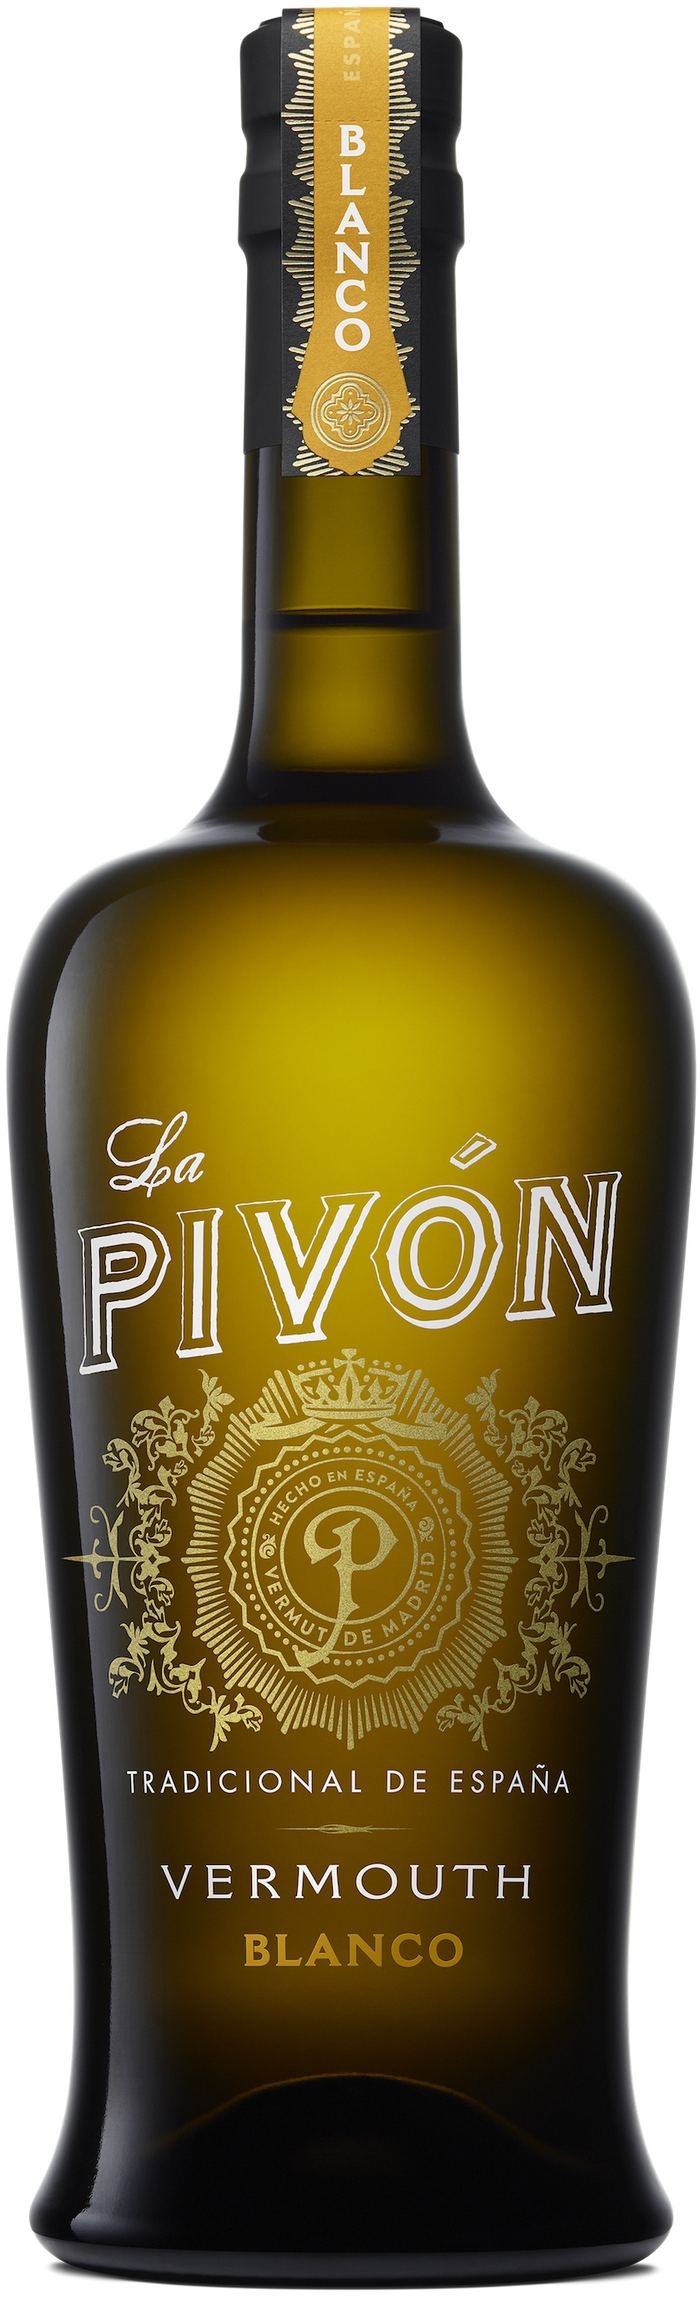 La Pivón Blanco Spanish Vermouth